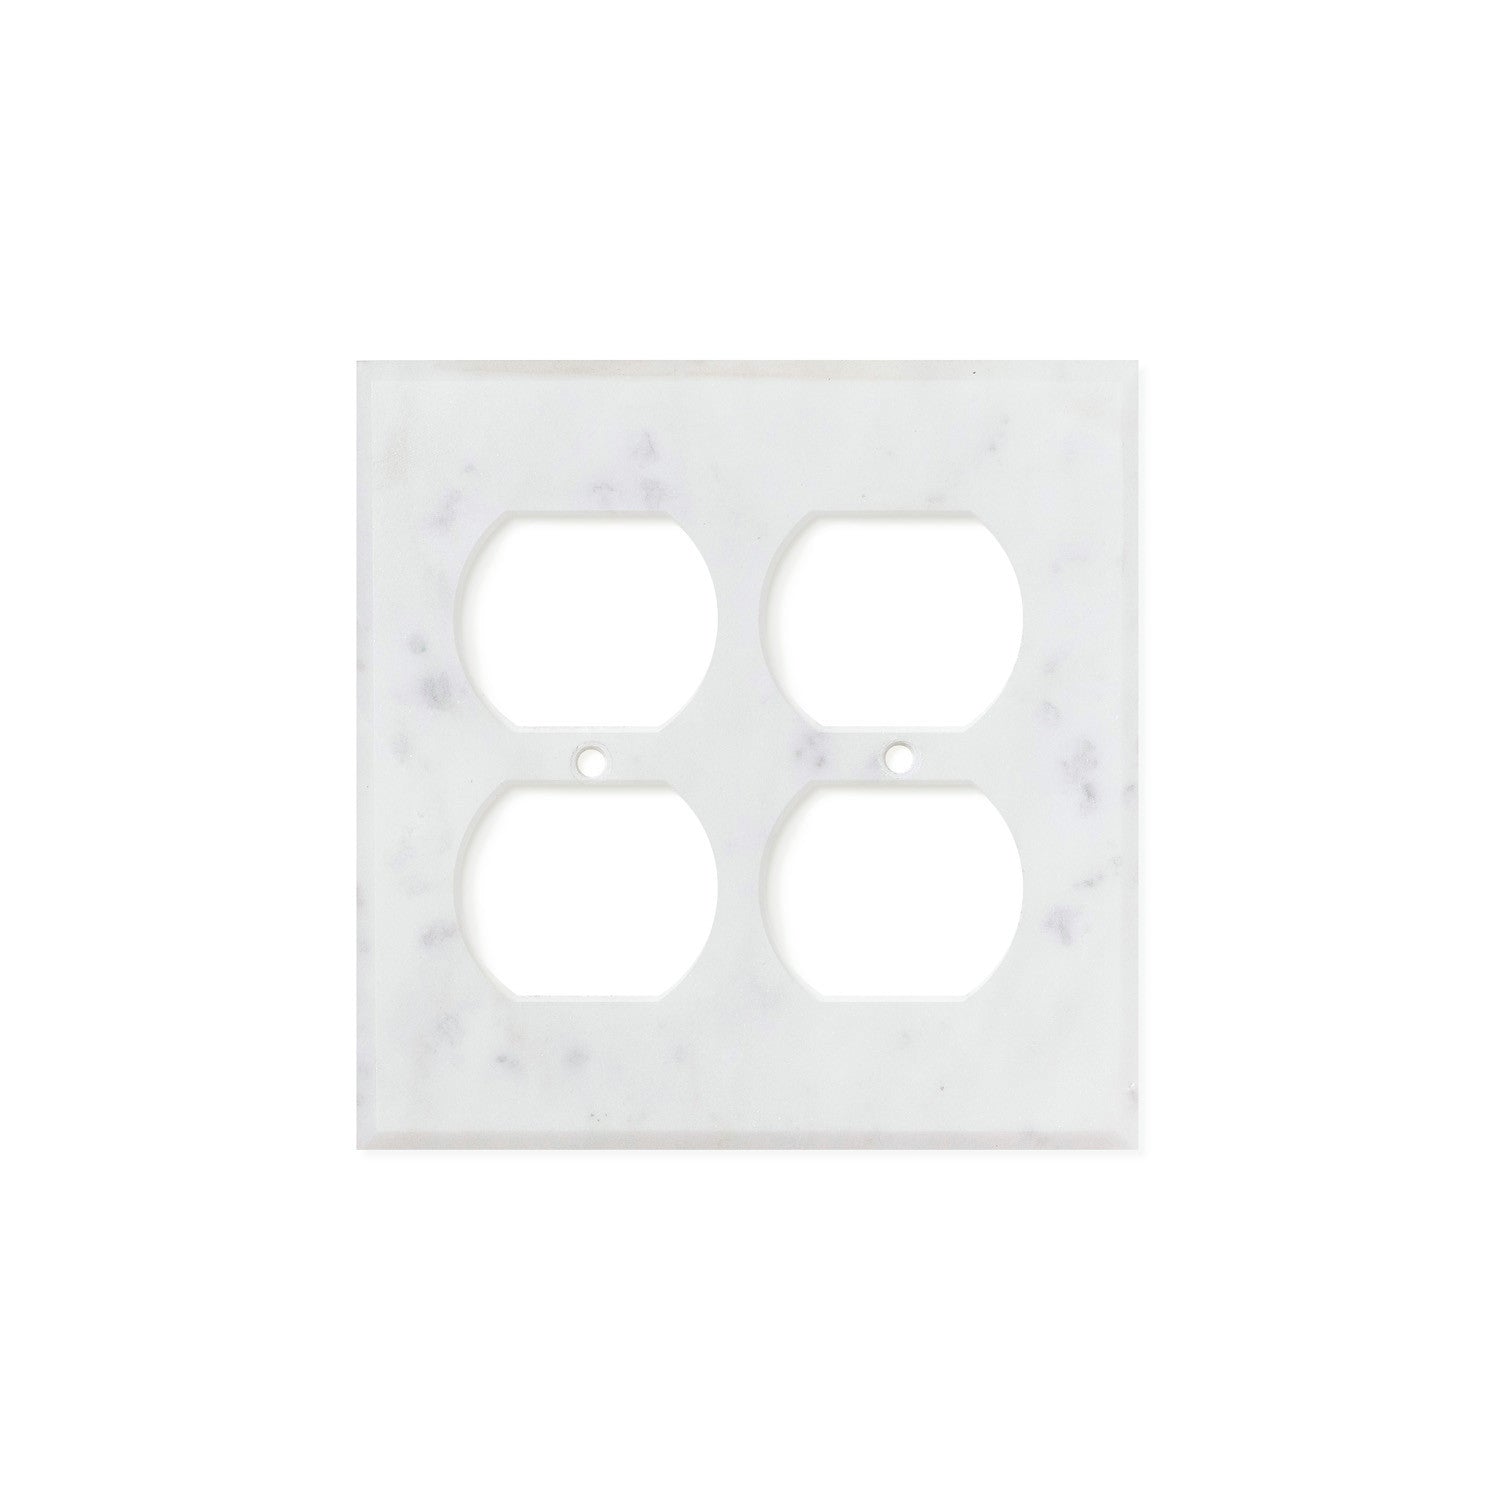 Bianco Carrara (Carrara White) Marble Switch Plate Cover, Honed (2 DUPLEX) - Tilephile